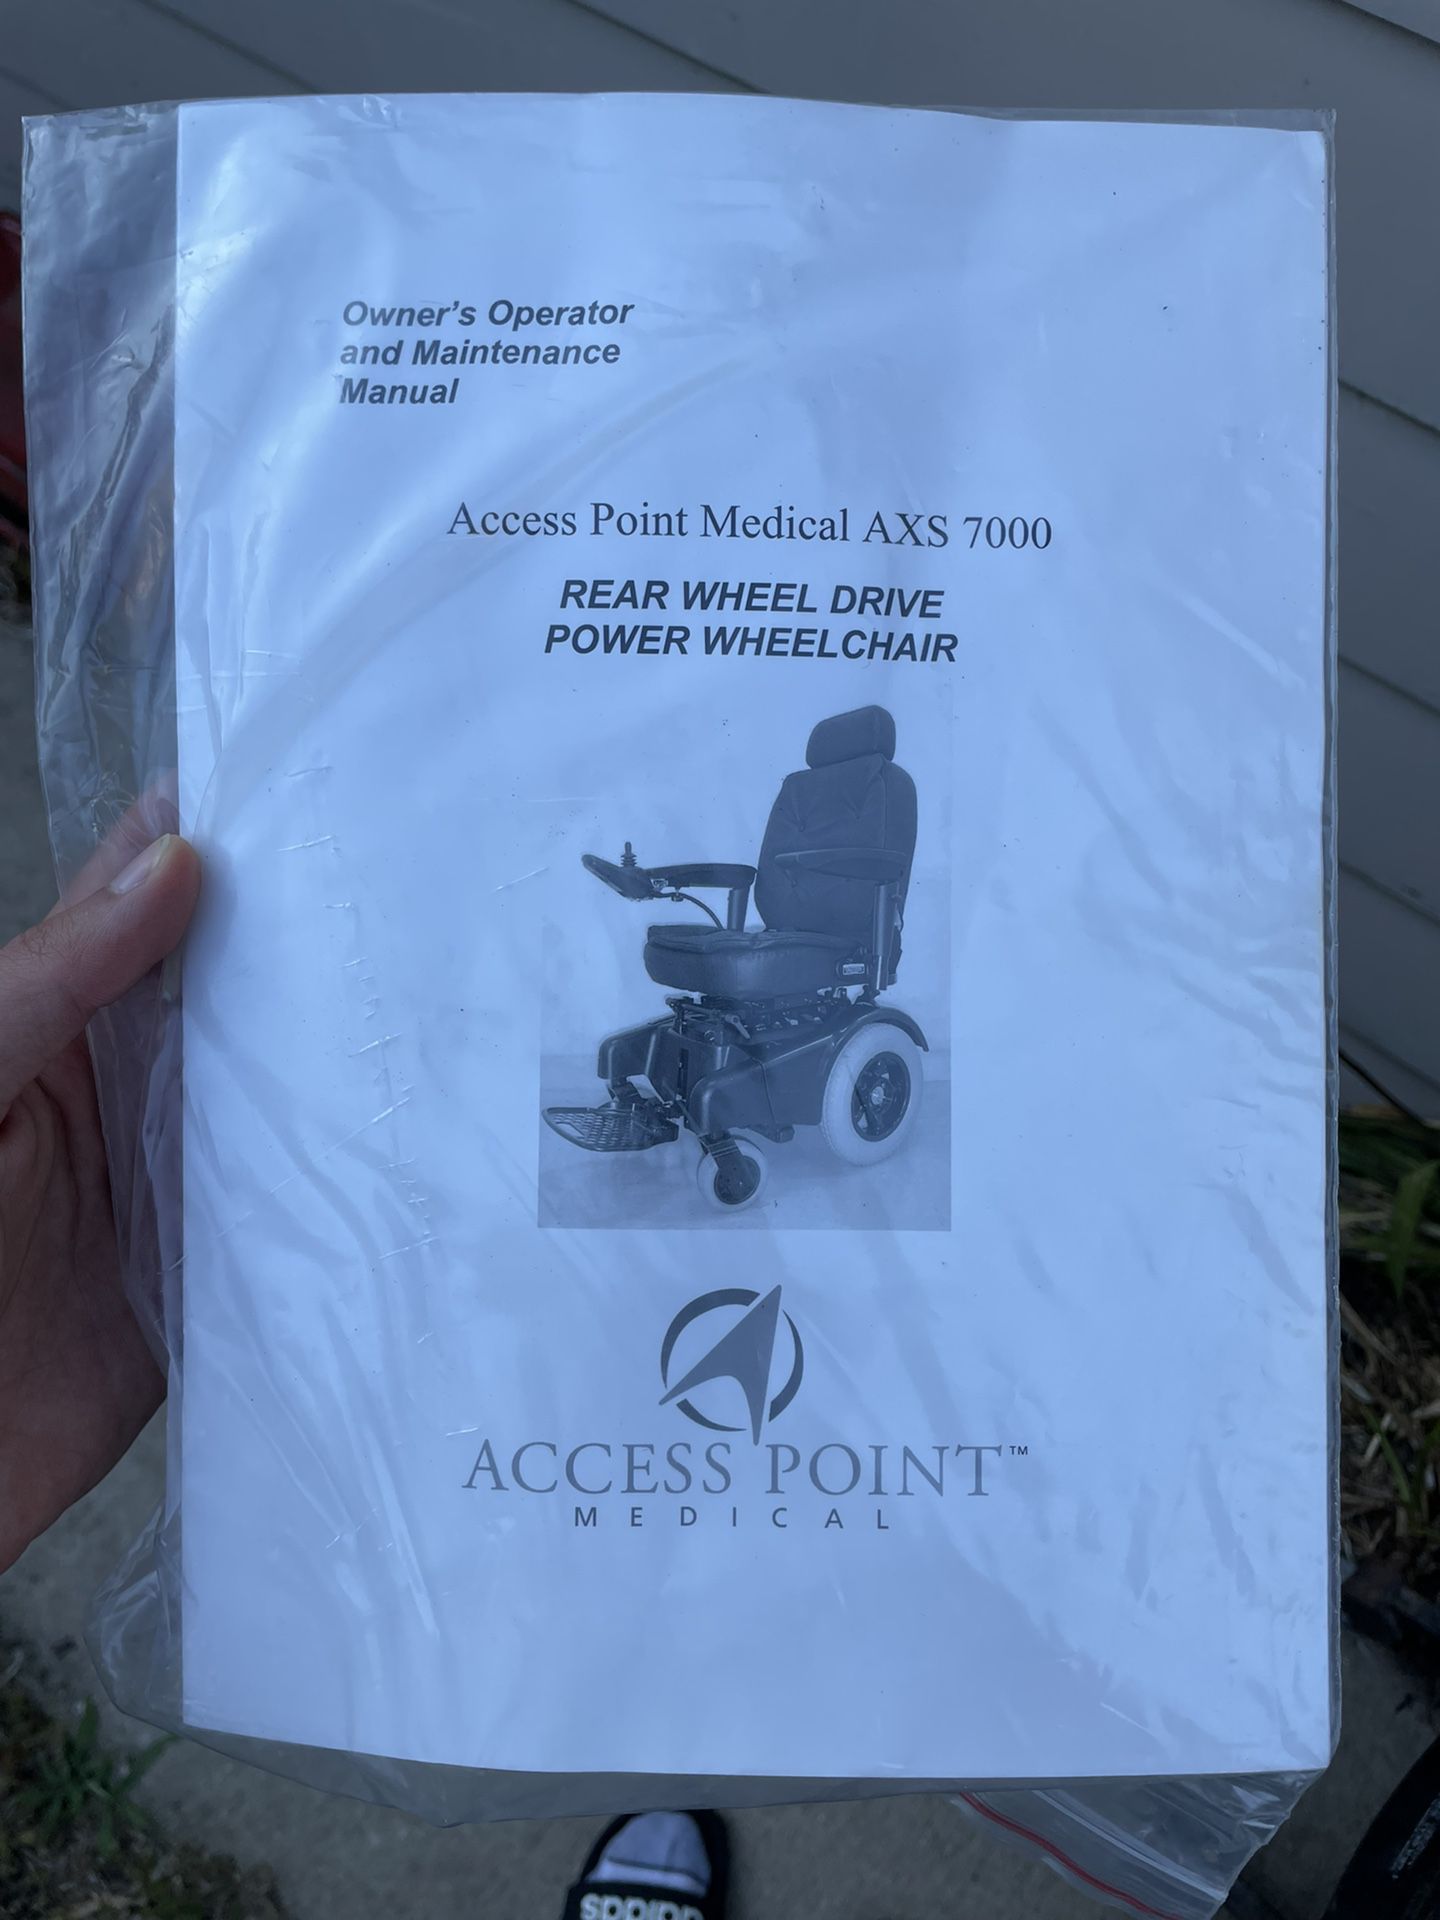 Access Point Medical AXS 7000 Power Wheelchair